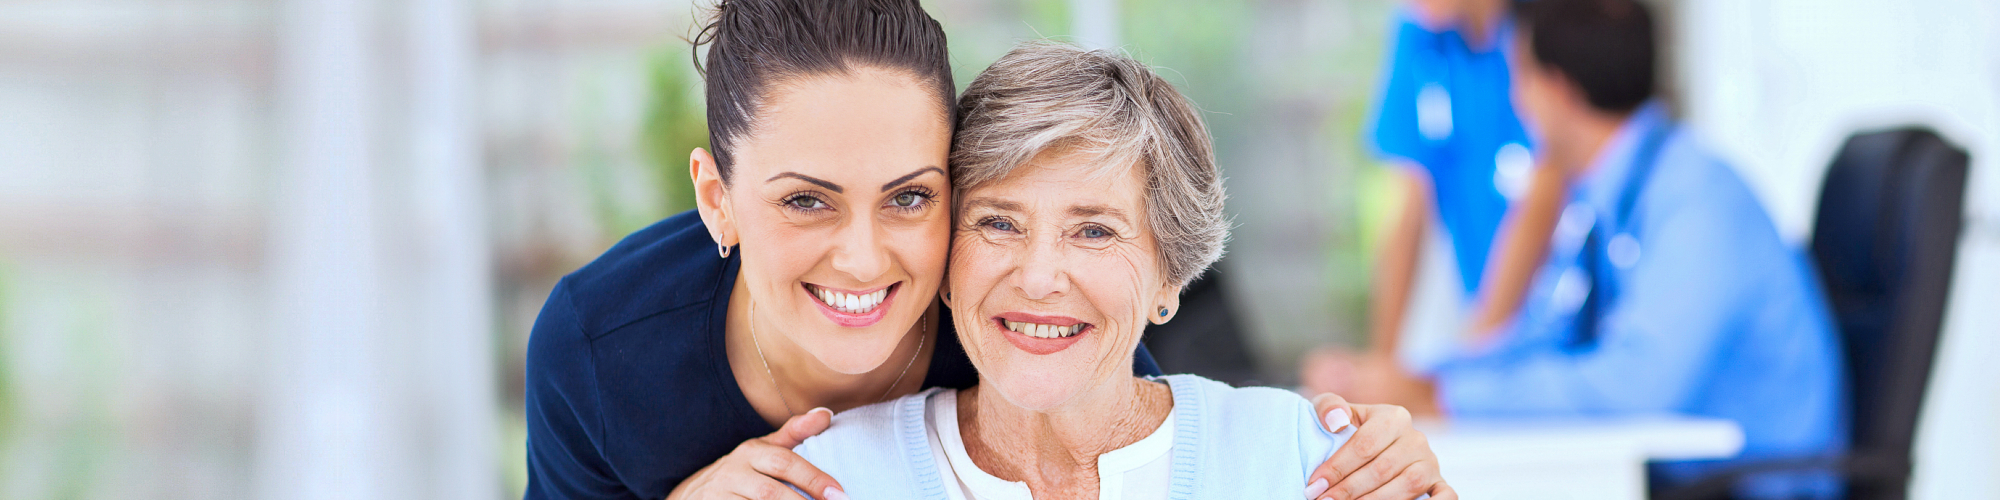 Senior woman and caregiver smiling together